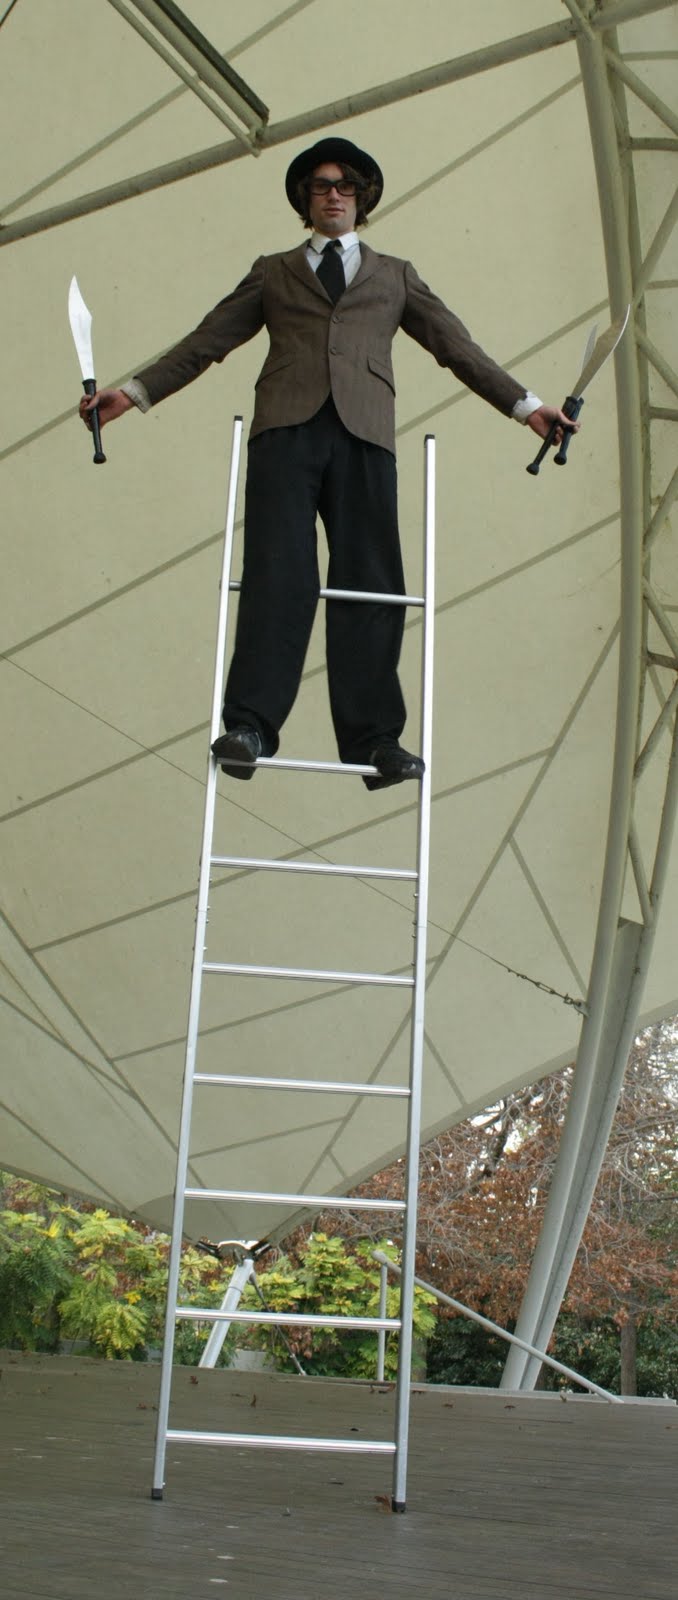 Lukie Luck - Circus Arts: Ladder balance